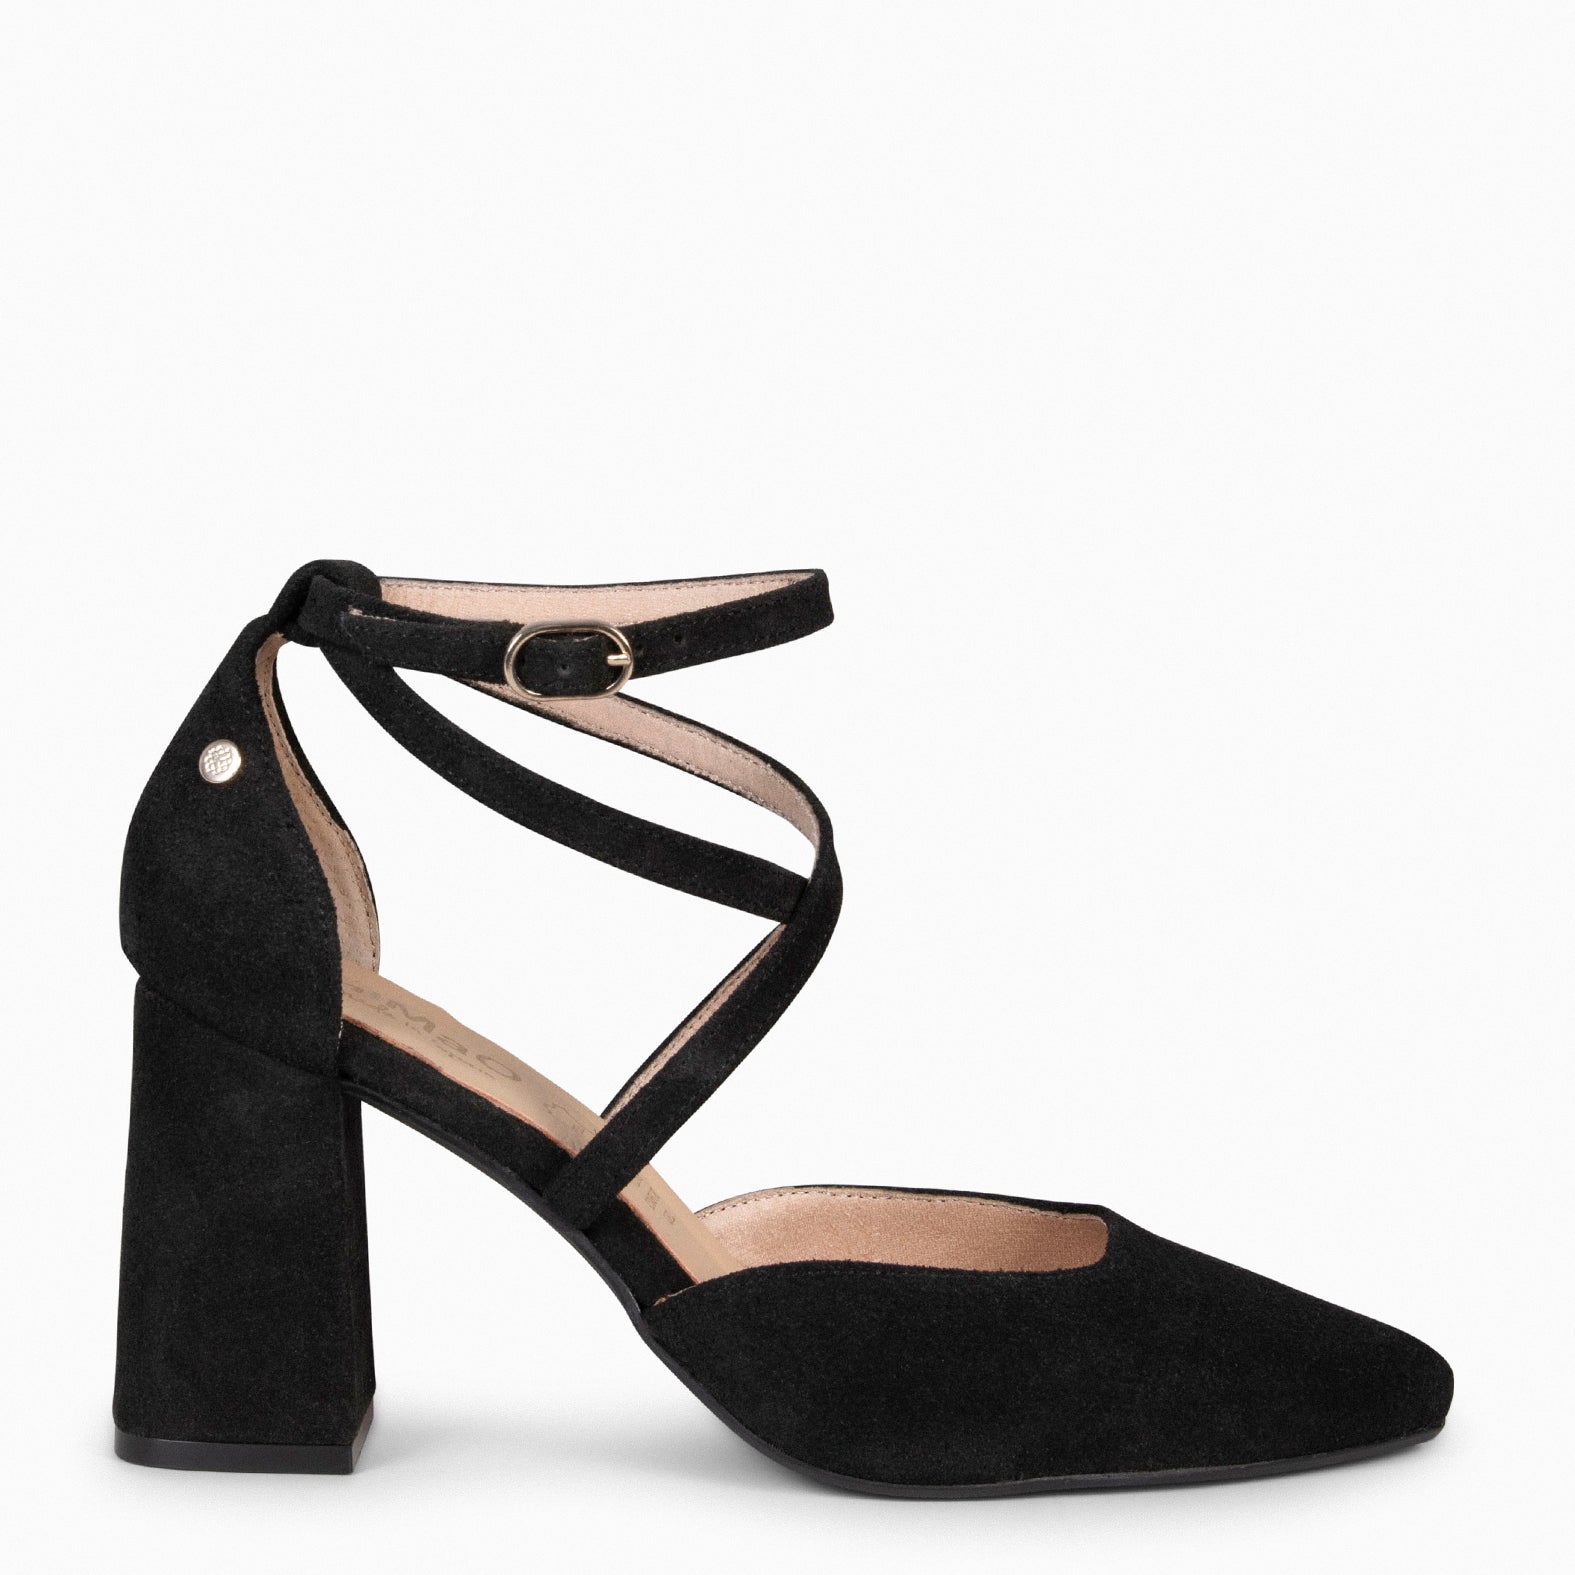 ARIEL – BLACK Wide heel shoe